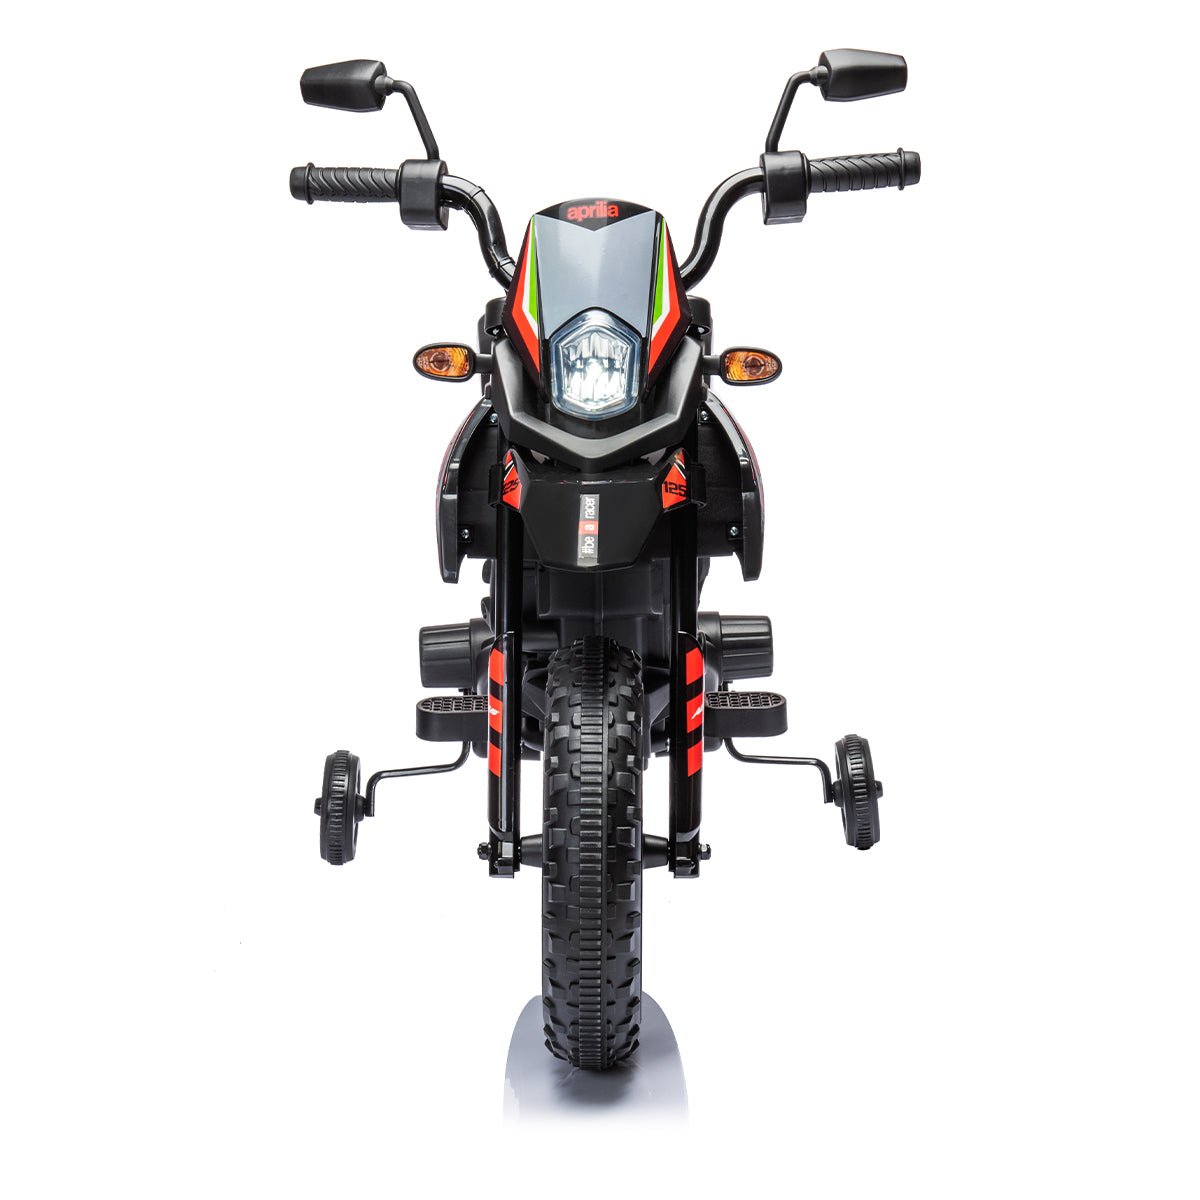 Aprilla RX125 Electric Ride On Motorbike